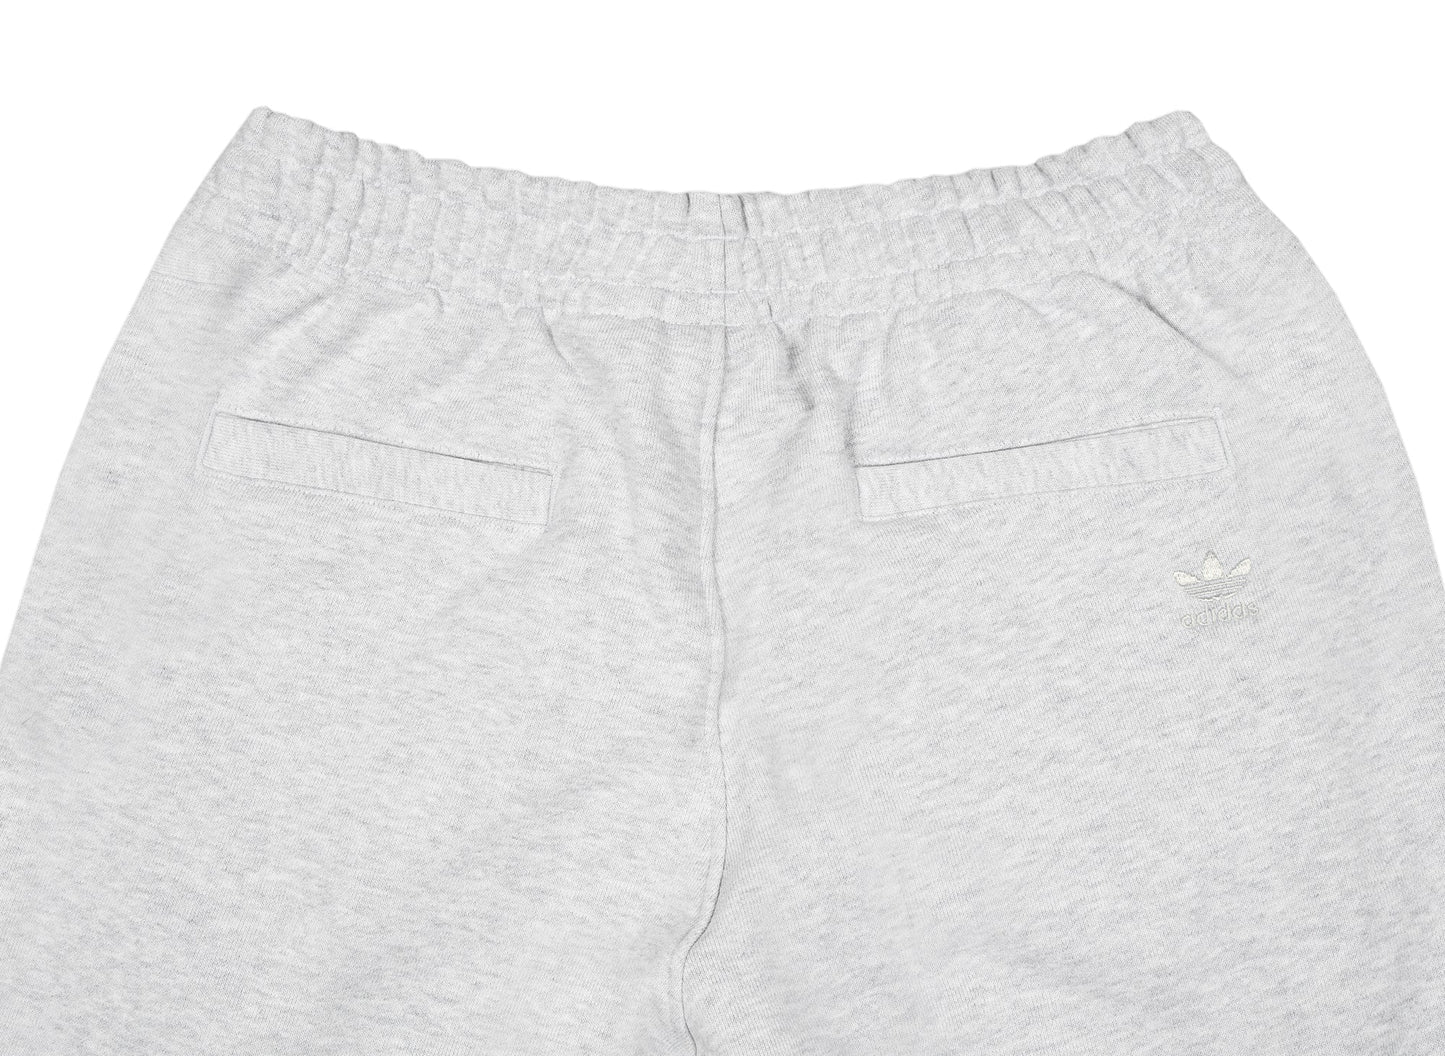 Adidas Pharrell Williams Basics Pants in Light Grey